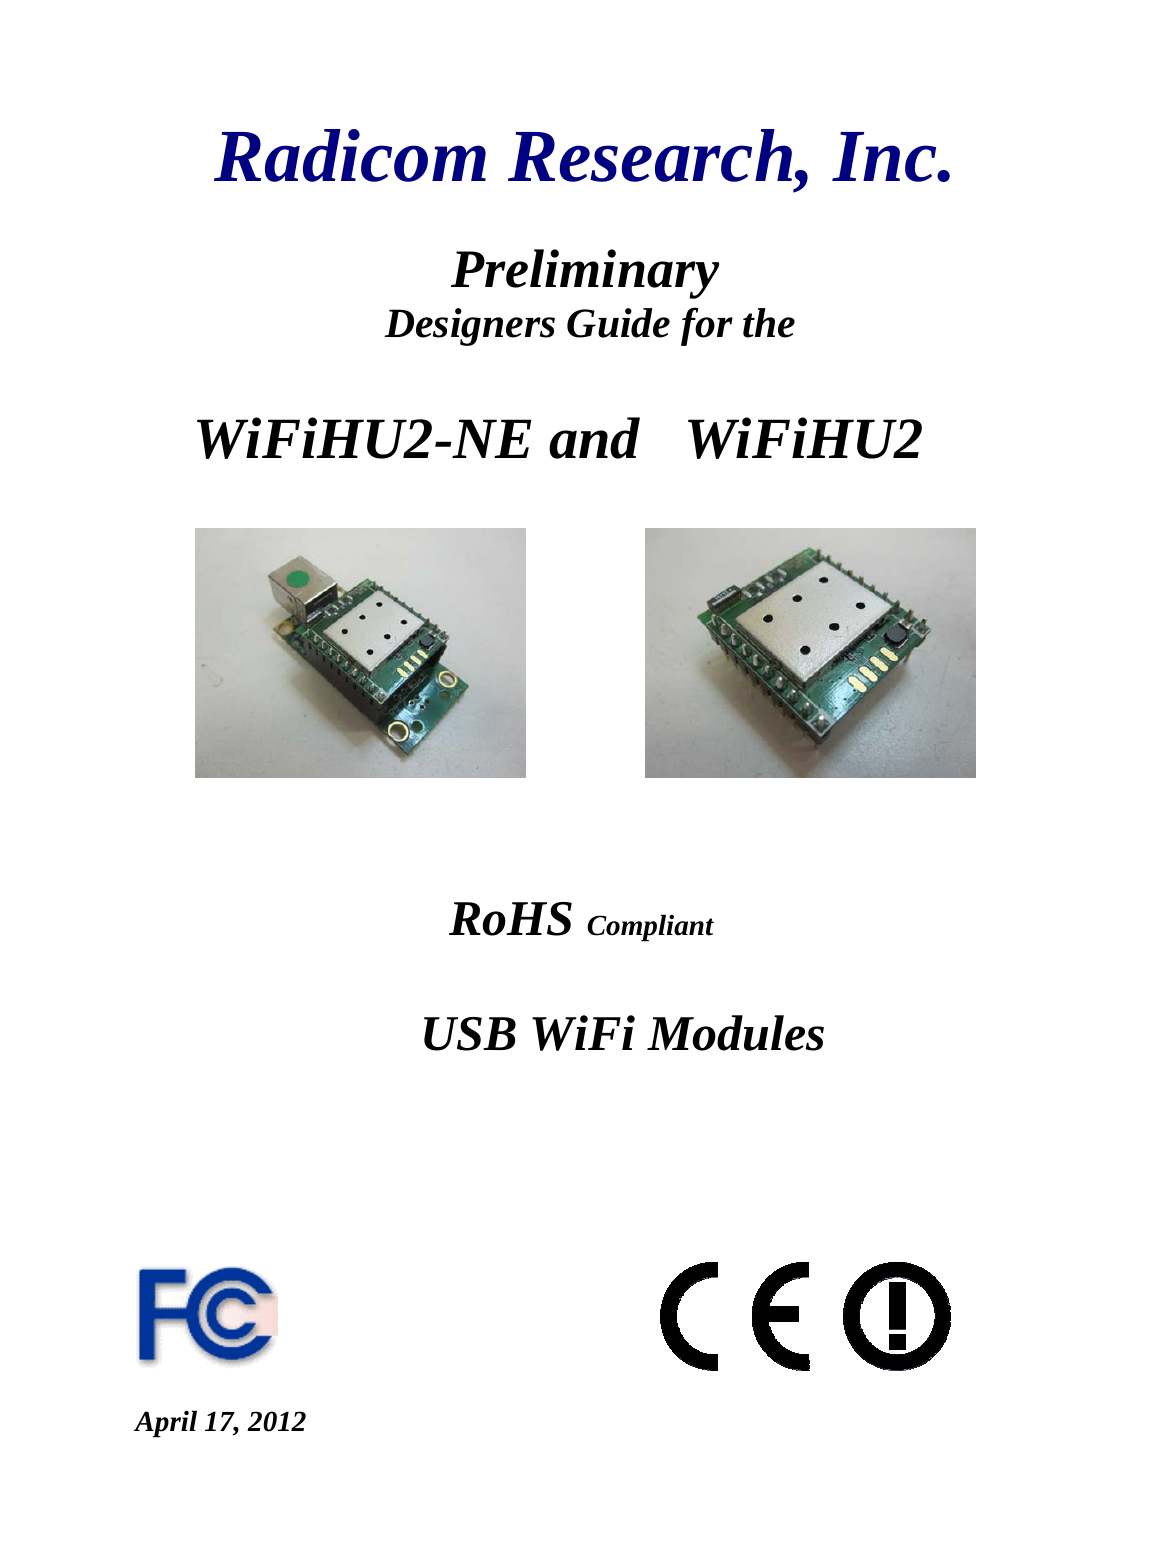   Radicom Research, Inc.  Preliminary  Designers Guide for the        WiFiHU2-NE and   WiFiHU2            RoHS Compliant  USB WiFi Modules               April 17, 2012   